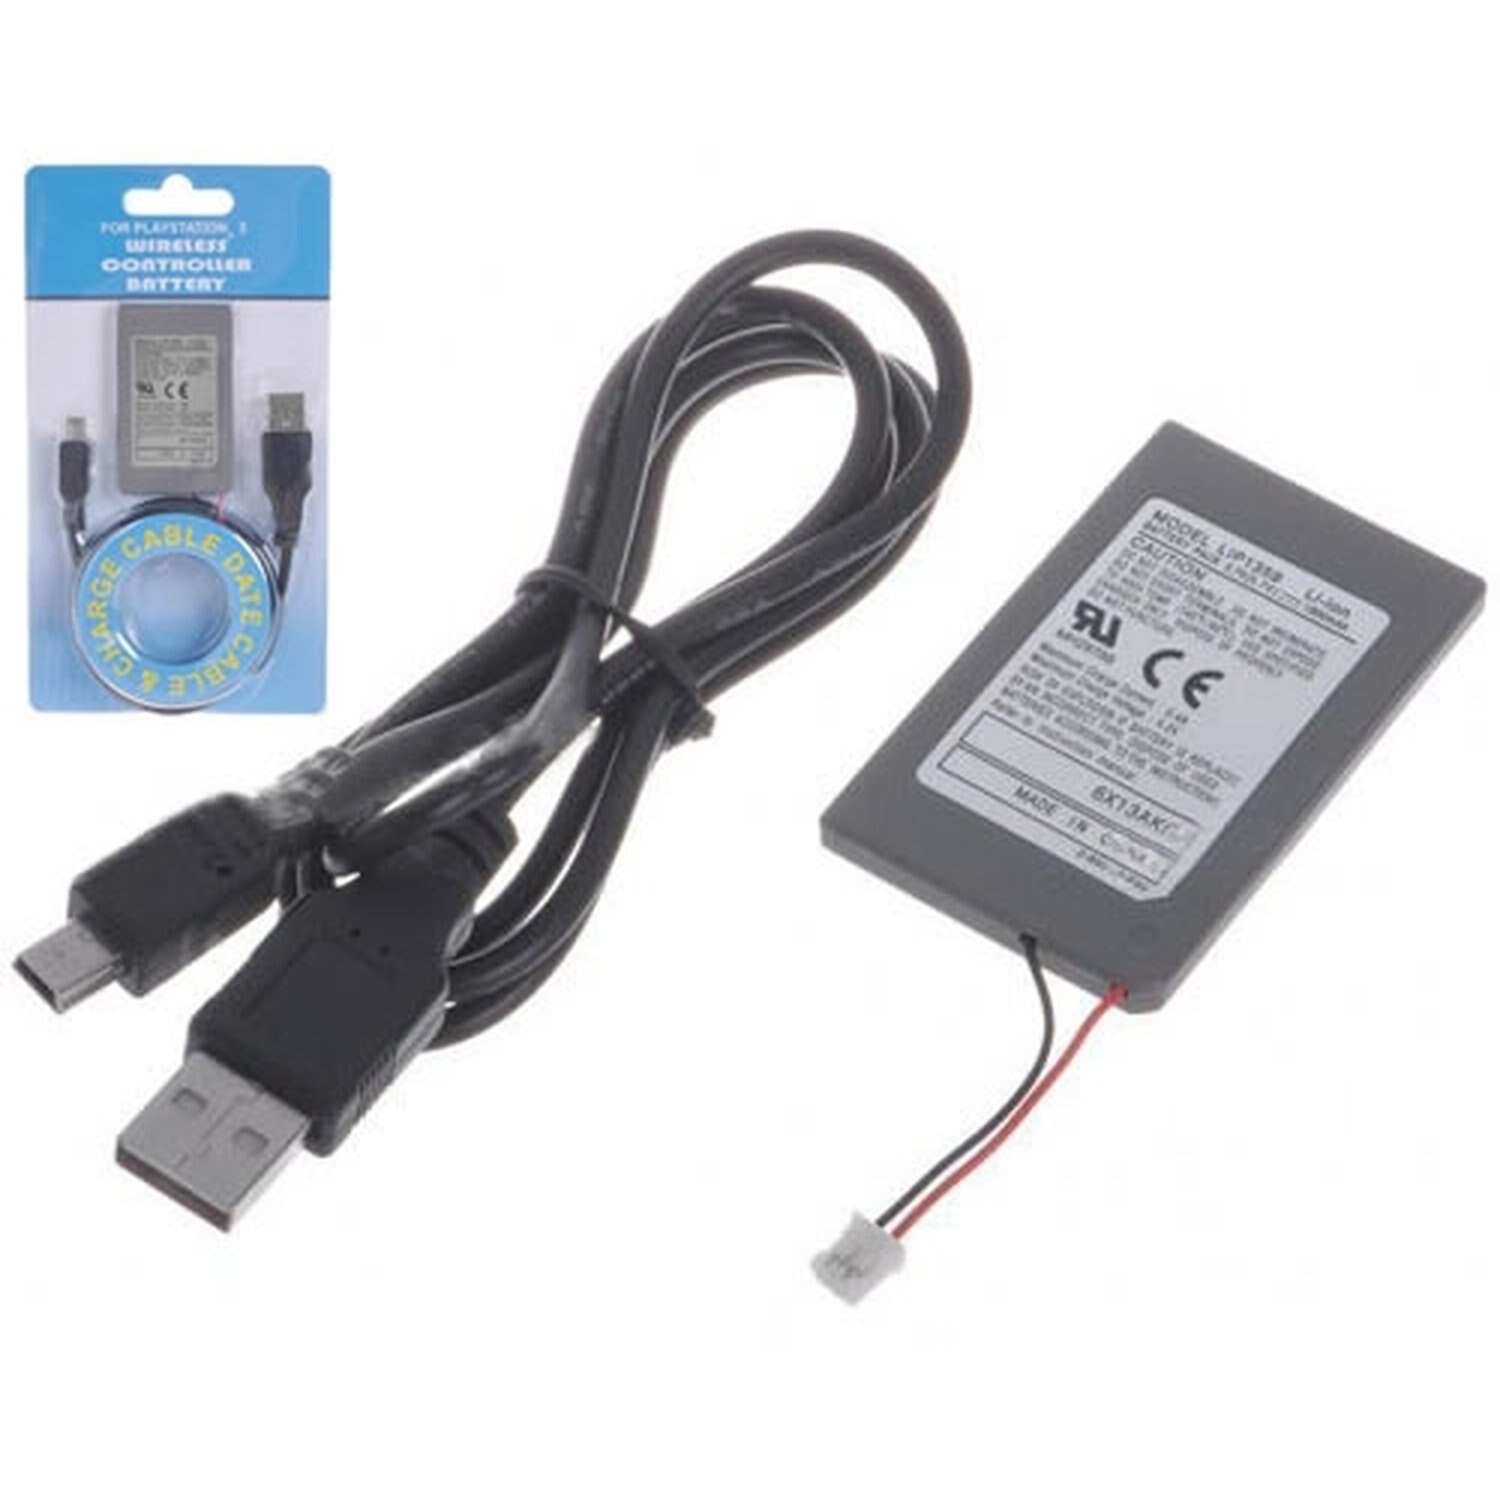 Oplaadbare Batterij 1800 Mah + Usb Charger Cable Playstation 3 PS3 Knop